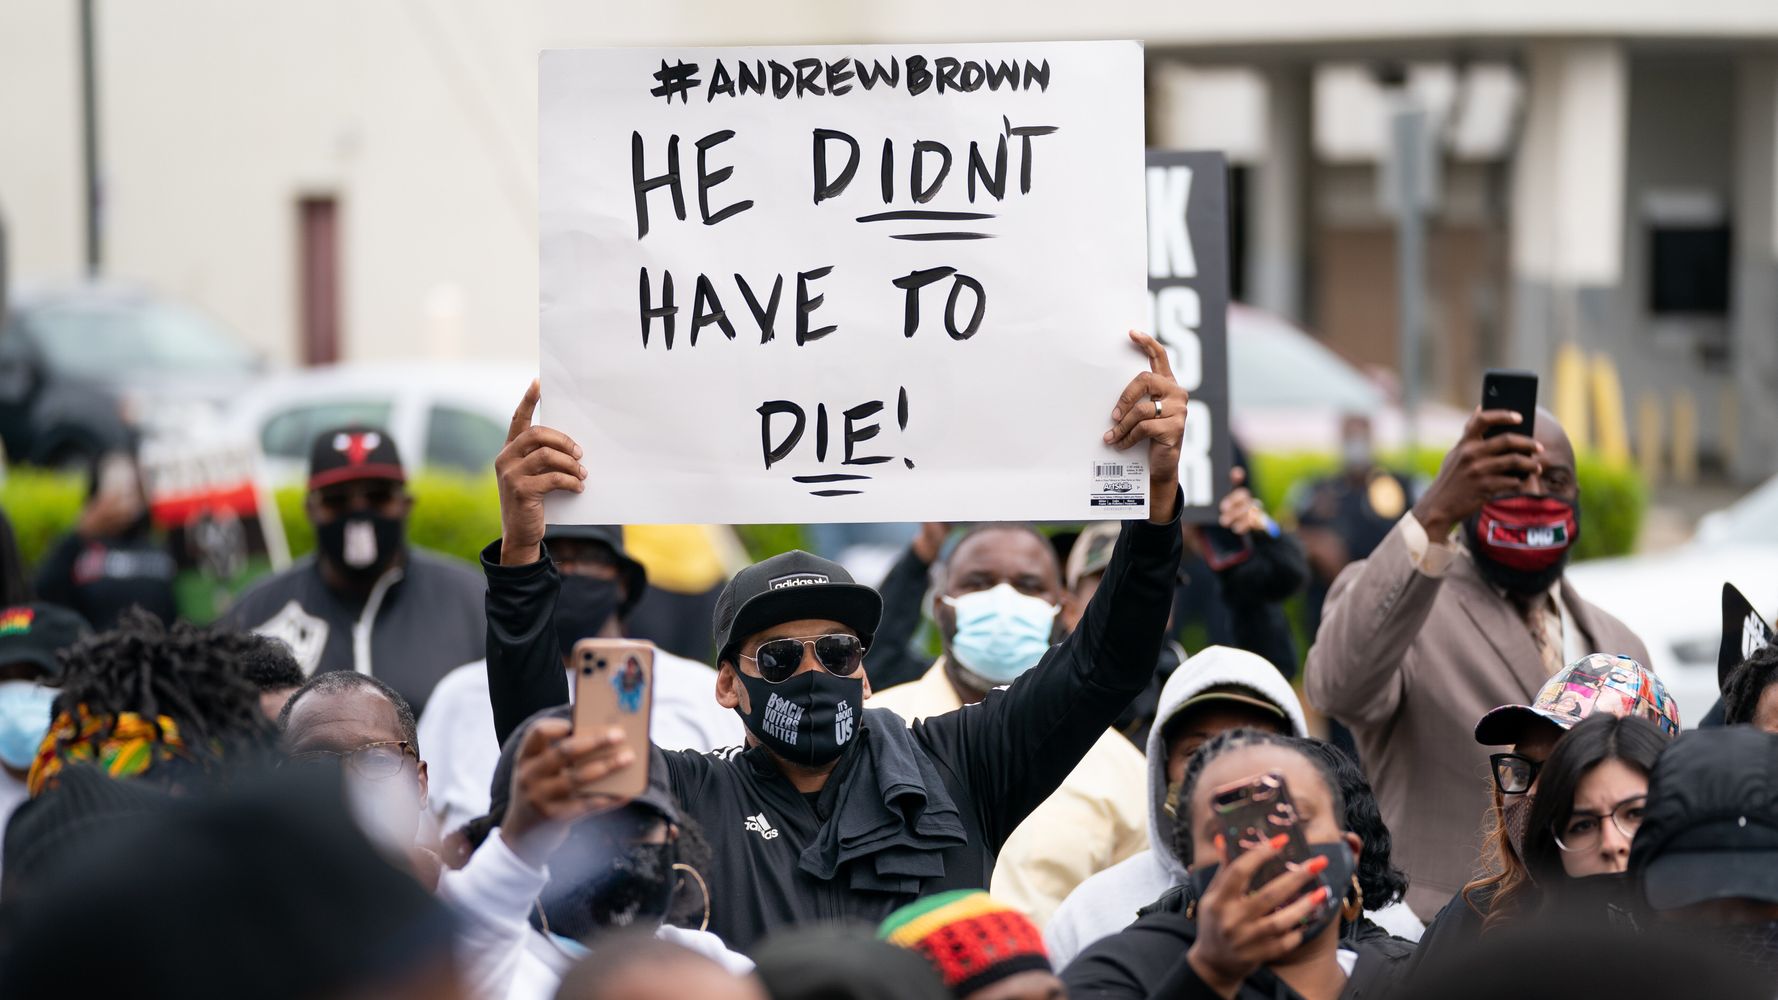 7 North Carolina Deputies On Leave After Police Shoot And Kill Black Man